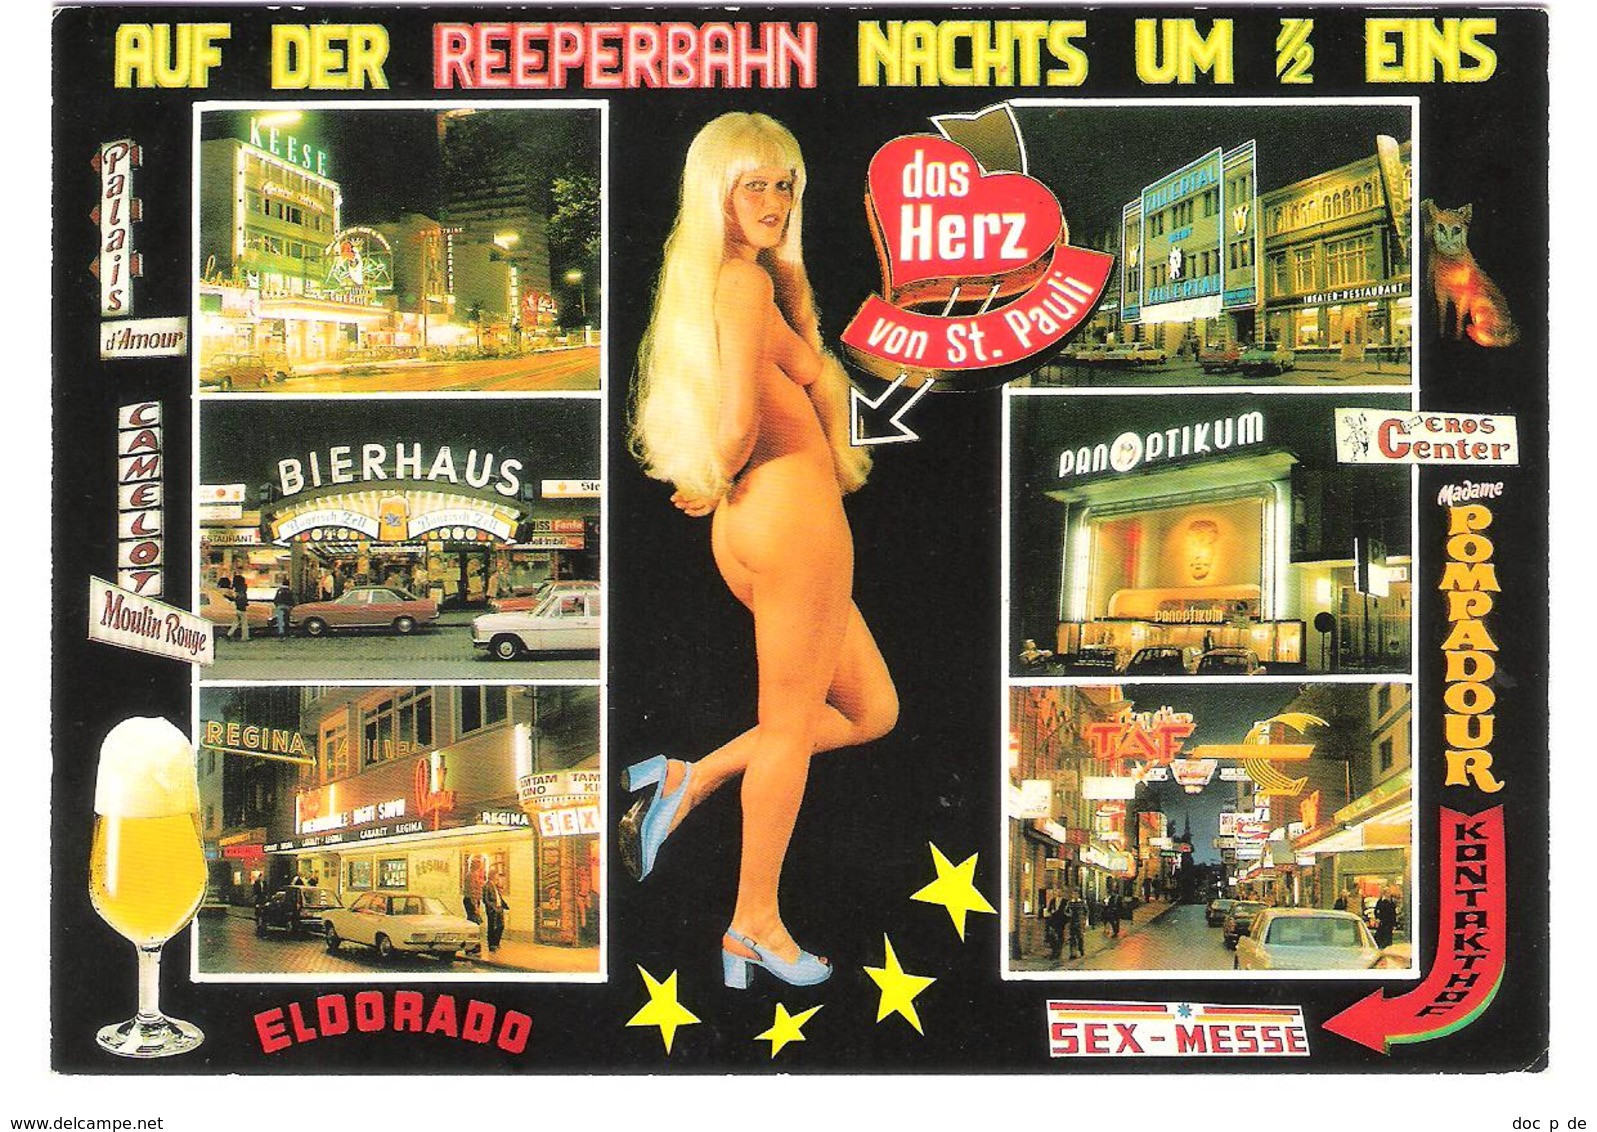 Germany - Hamburg - St. Pauli - Reeperbahn - PIN UP - Femme - Nude Girl - Woman - Frau - Erotic - Erotik - Pin-Ups